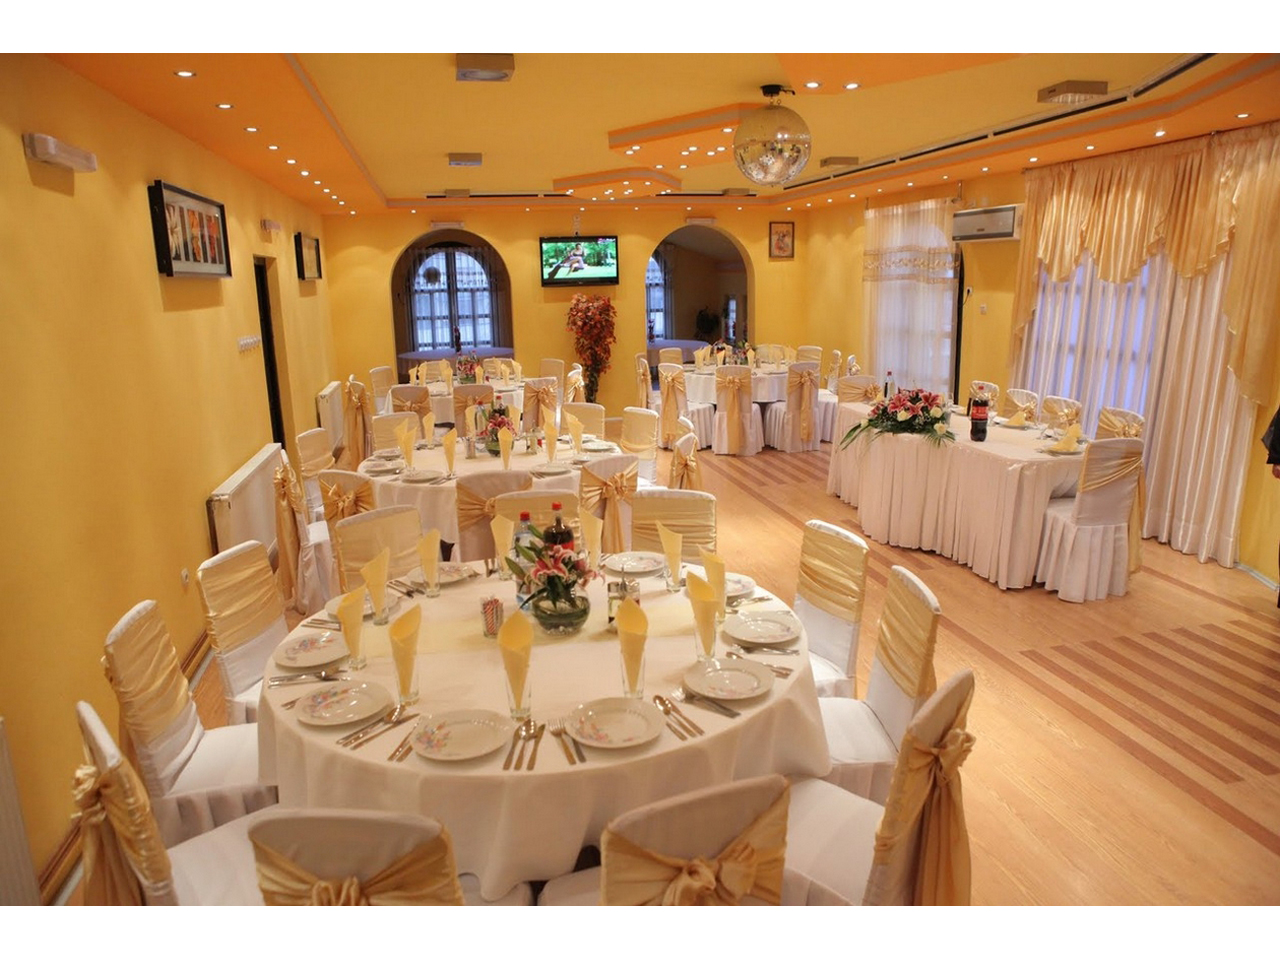 VILLA ATINA CEREMONY HALL Restaurants for weddings, celebrations Belgrade - Photo 4